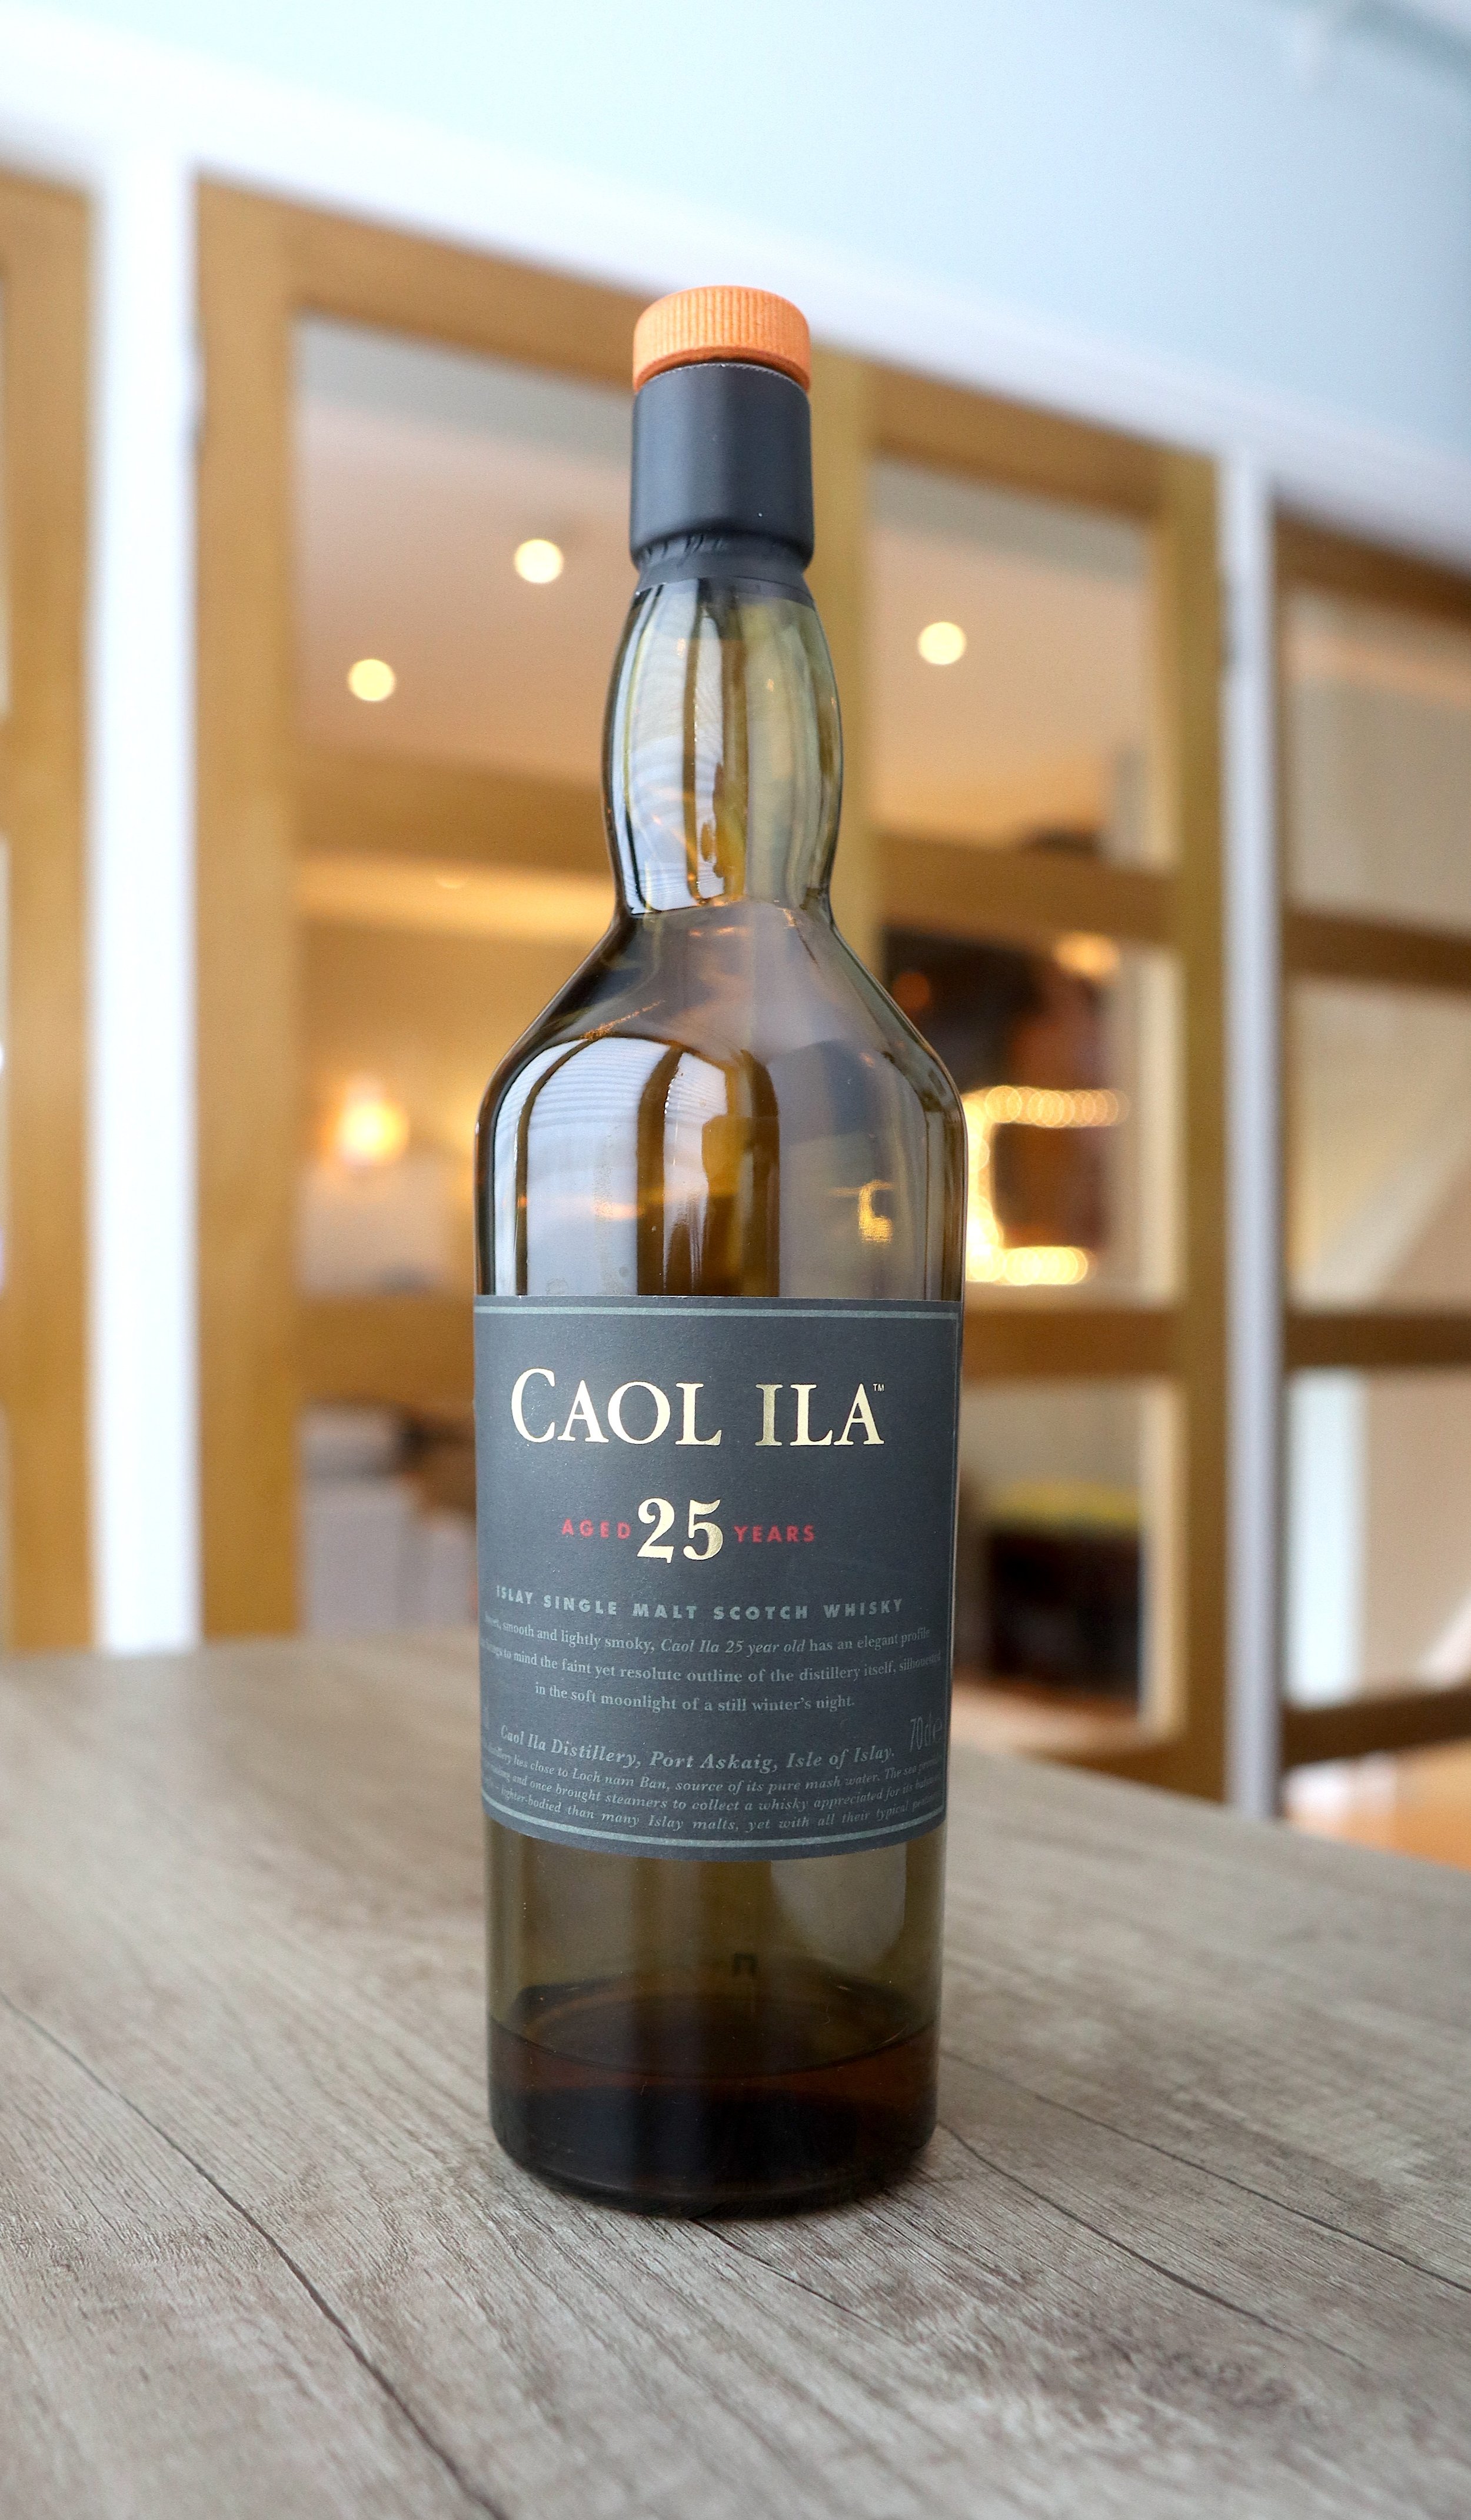 Whisky CAOL ILA 18 ans 43% - Single Malt